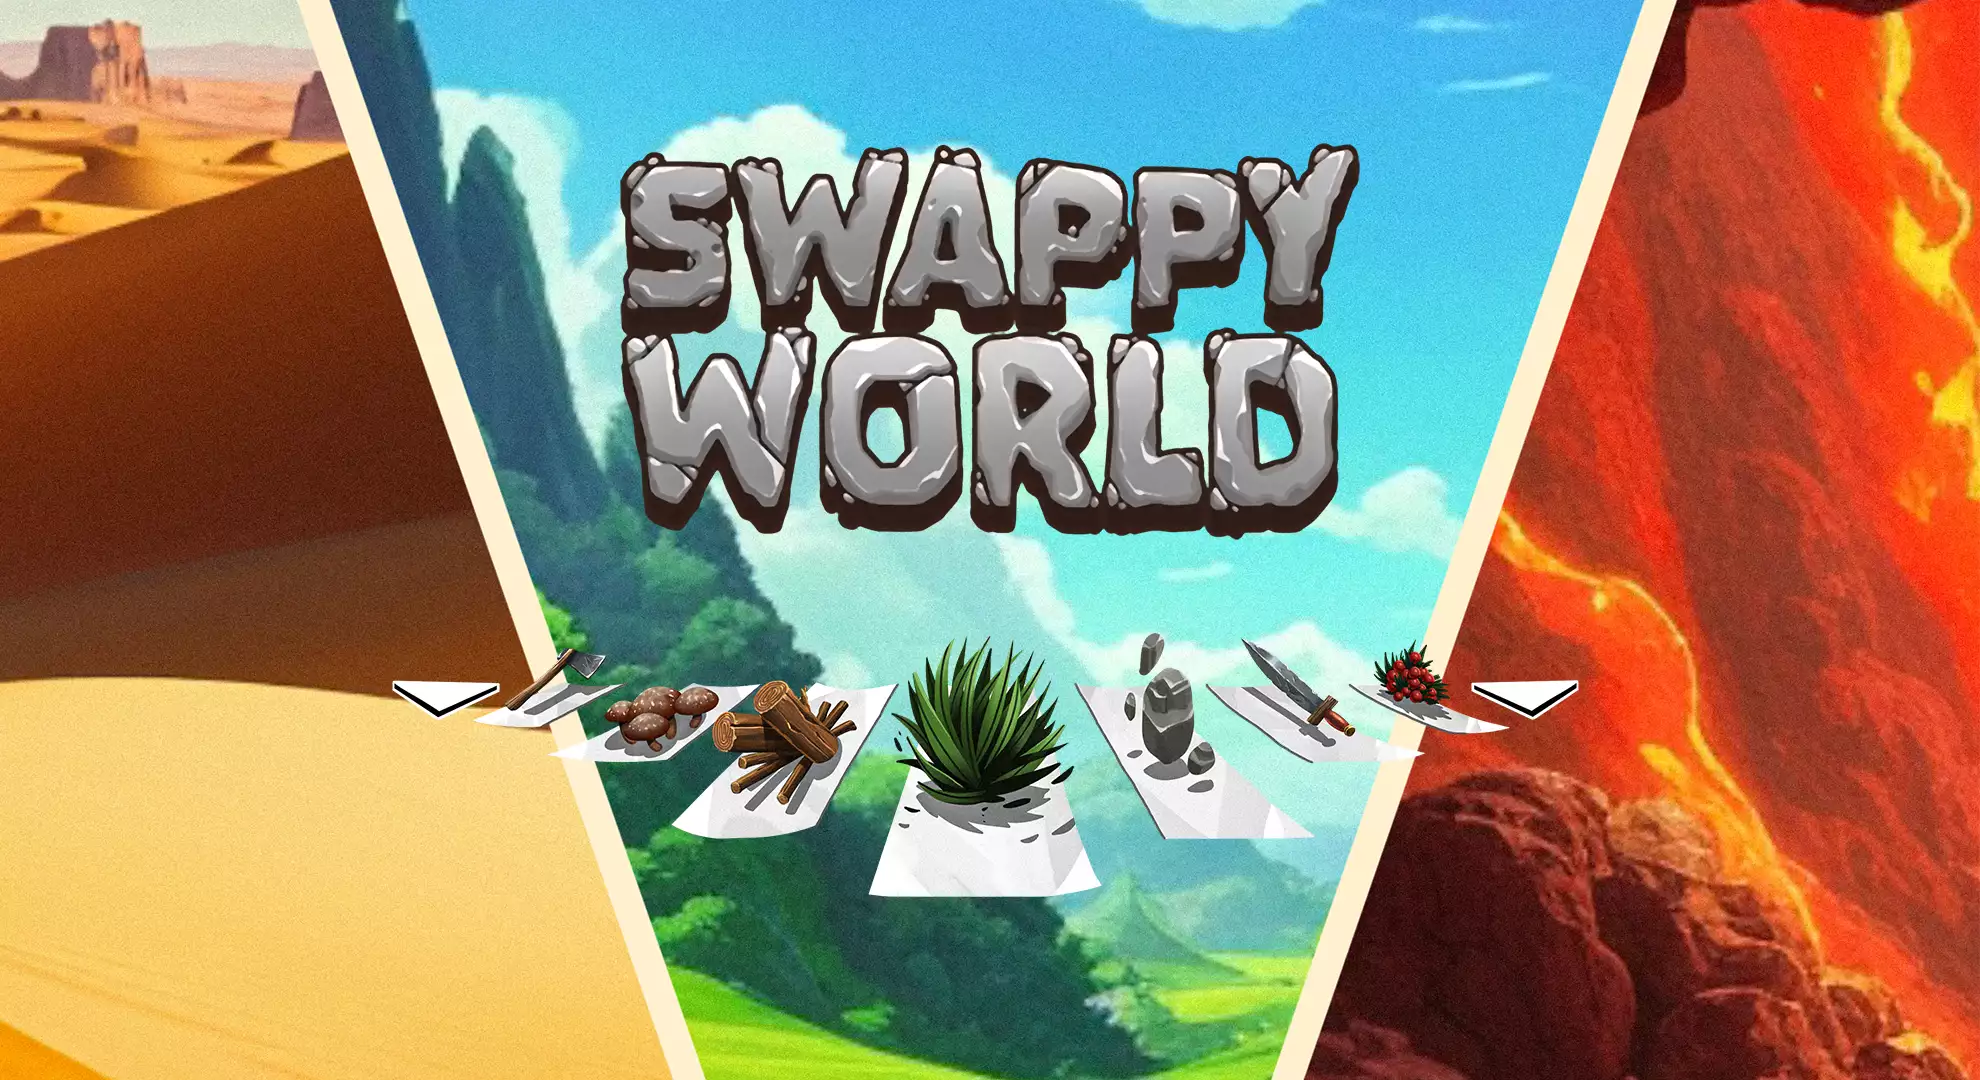 Swappy World